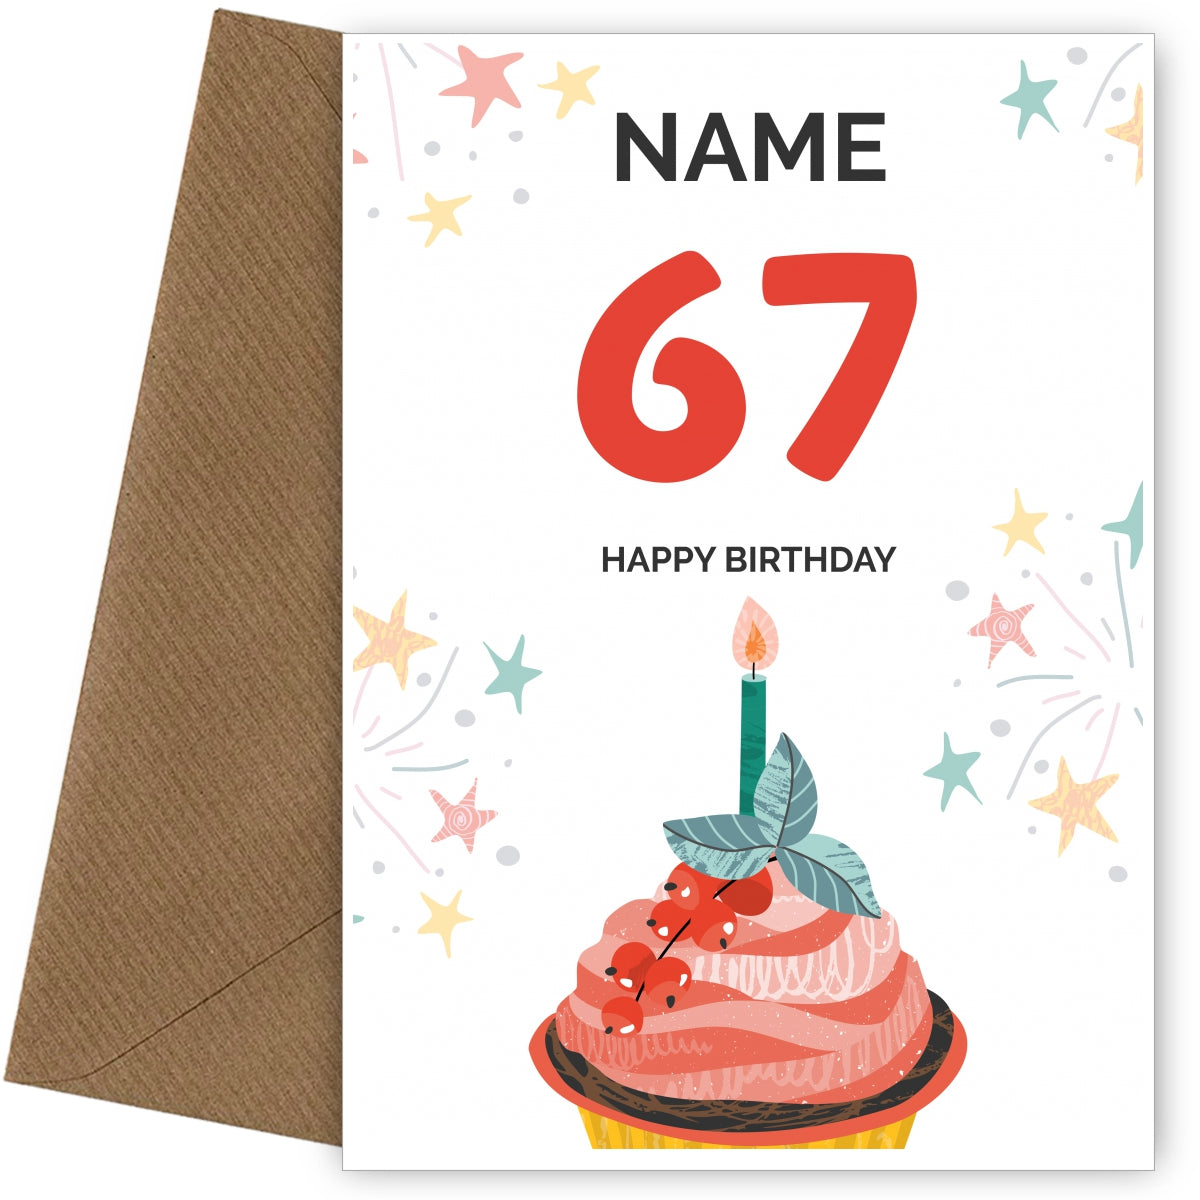 Happy 67th Birthday Card - Fun Cupcake Design